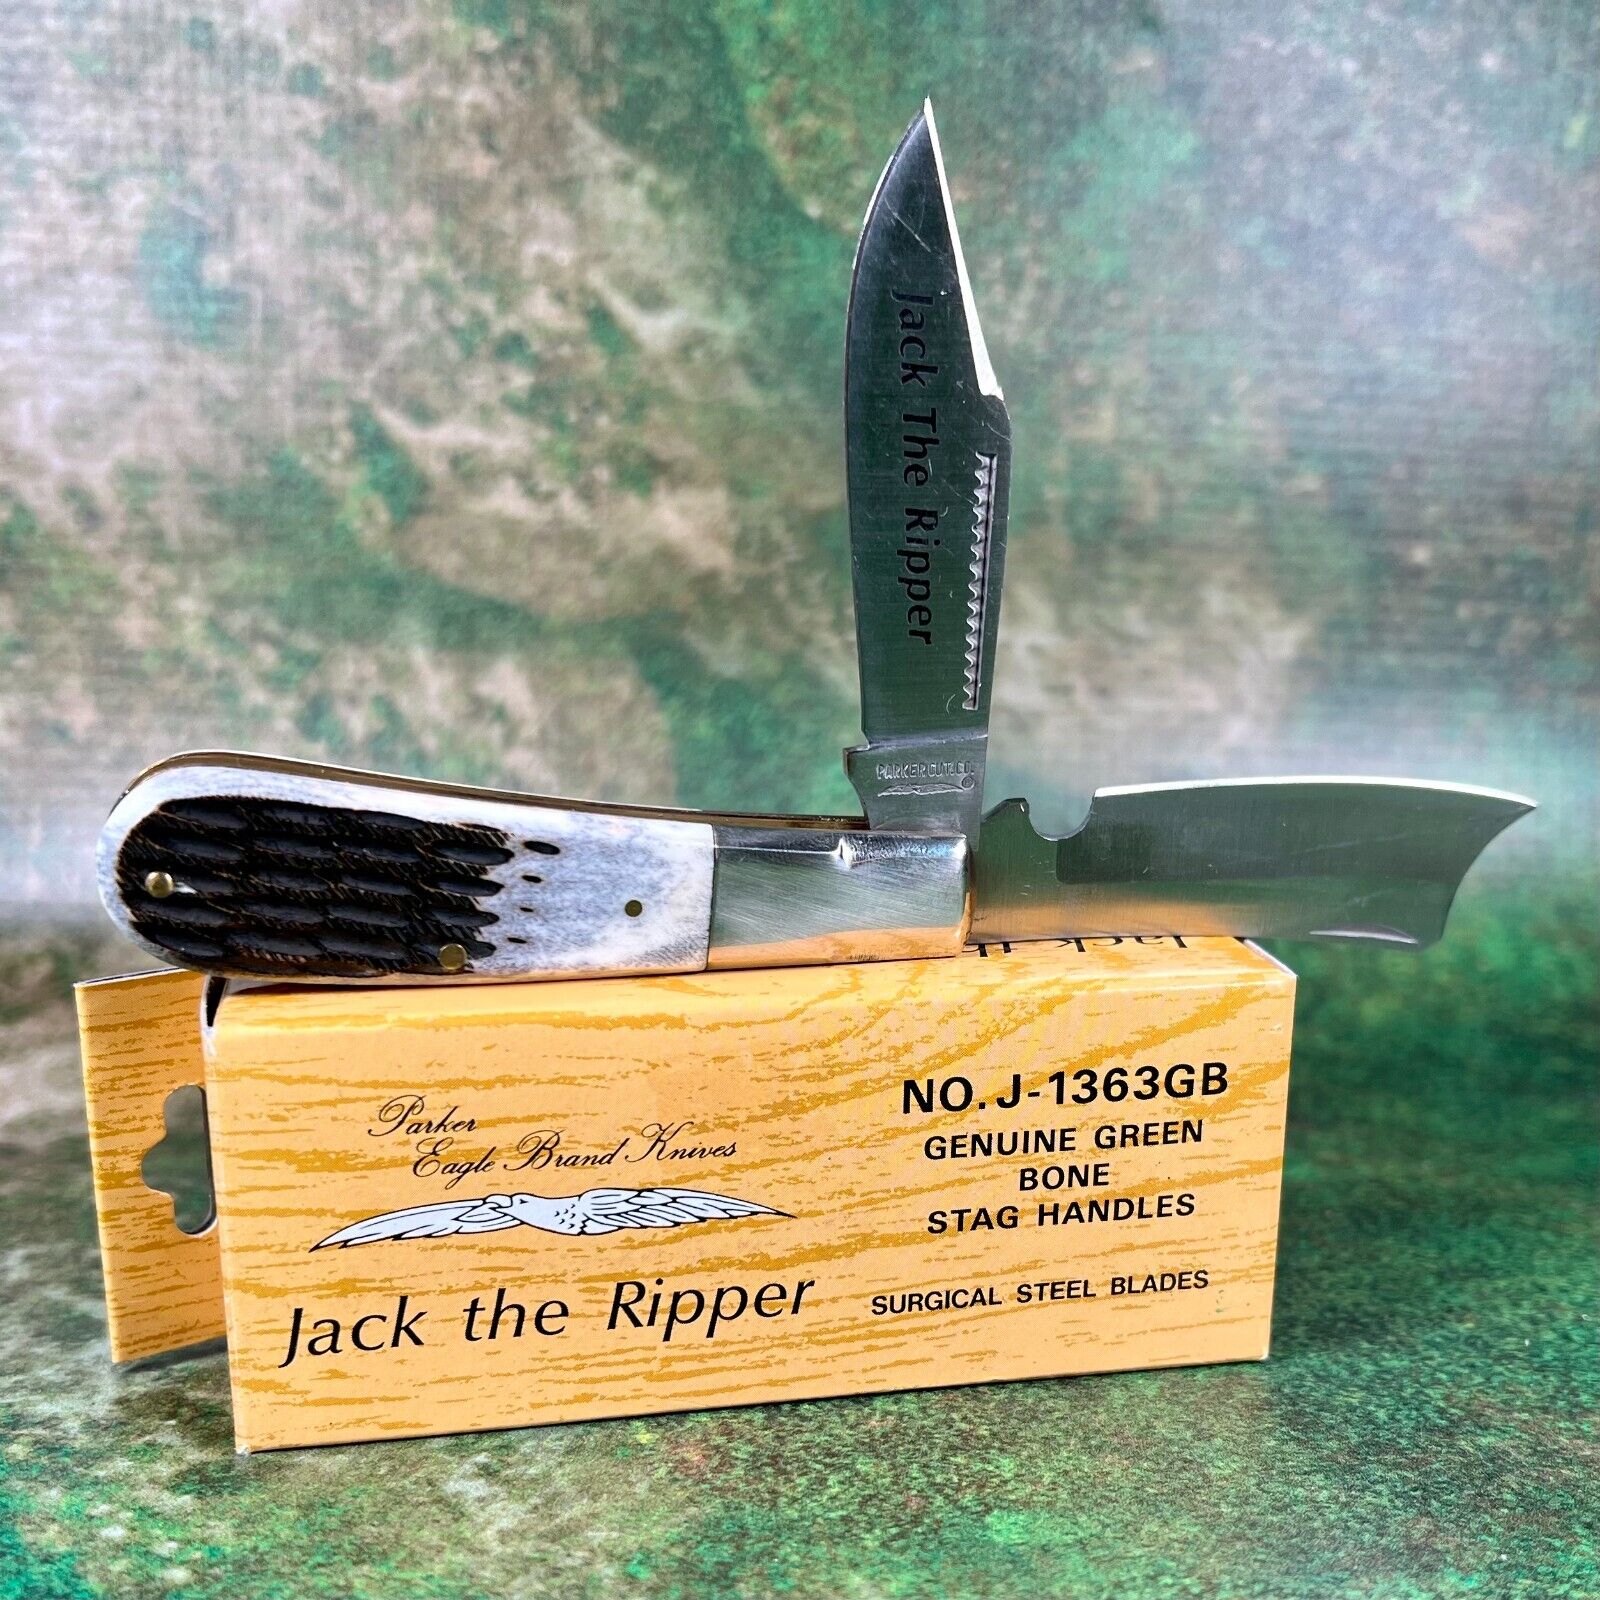 Vintage Parker Cutlery Eagle Brand Knives, Jack the Ripper, No. J-1363GB, 1980's